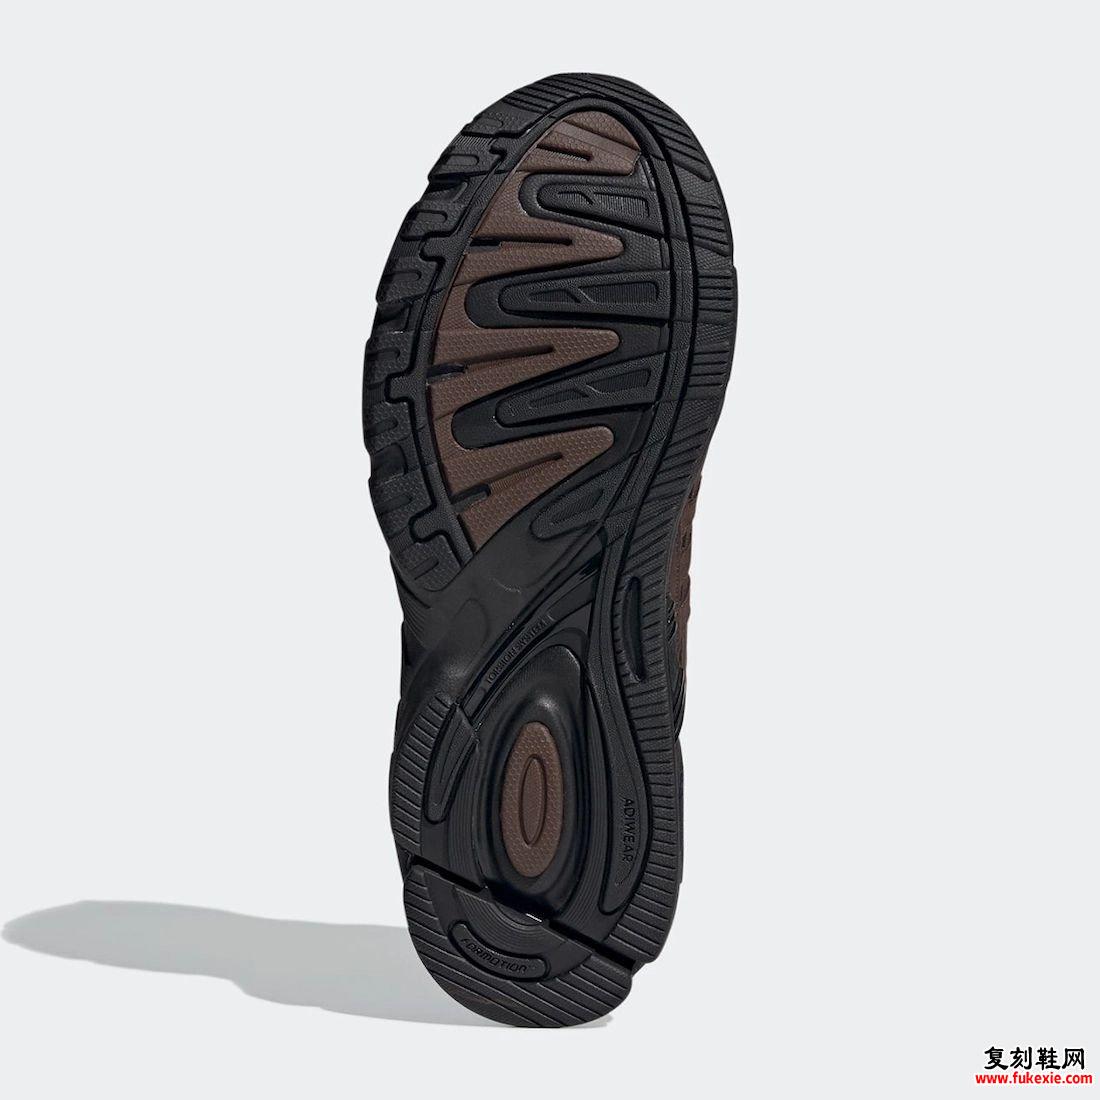 adidas Response CL棕色黑色FX7727发售日期